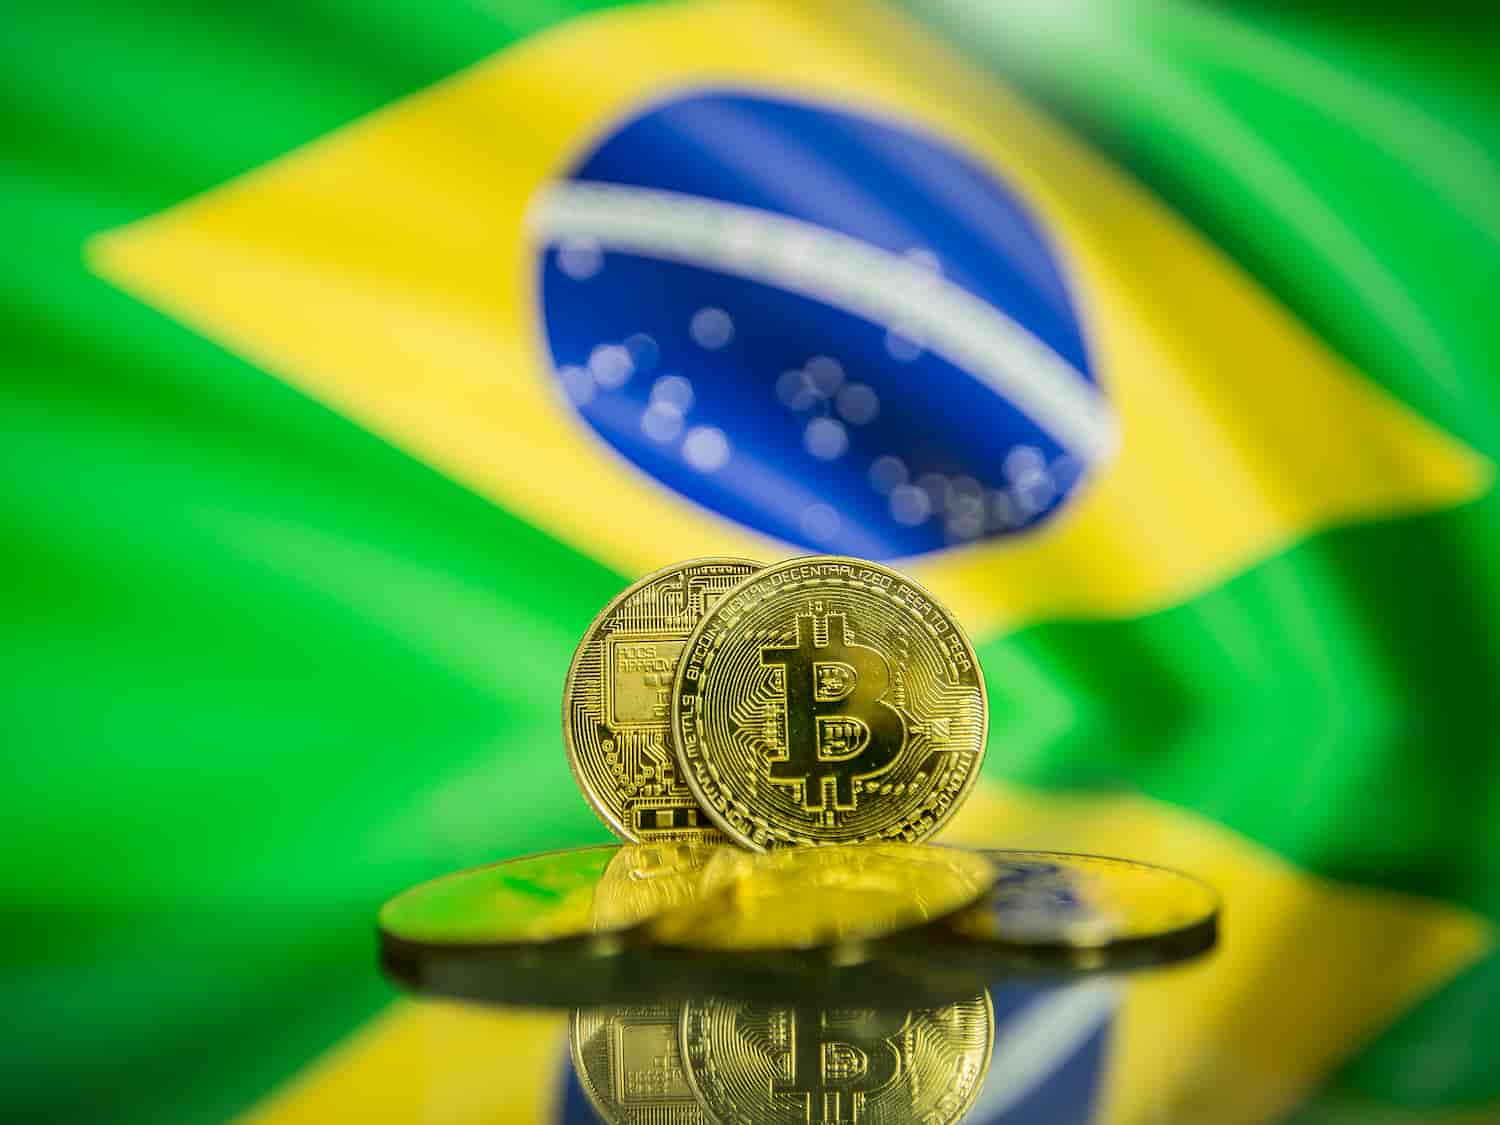 Moeda de Bitcoin com bandeira do Brasil ao fundo